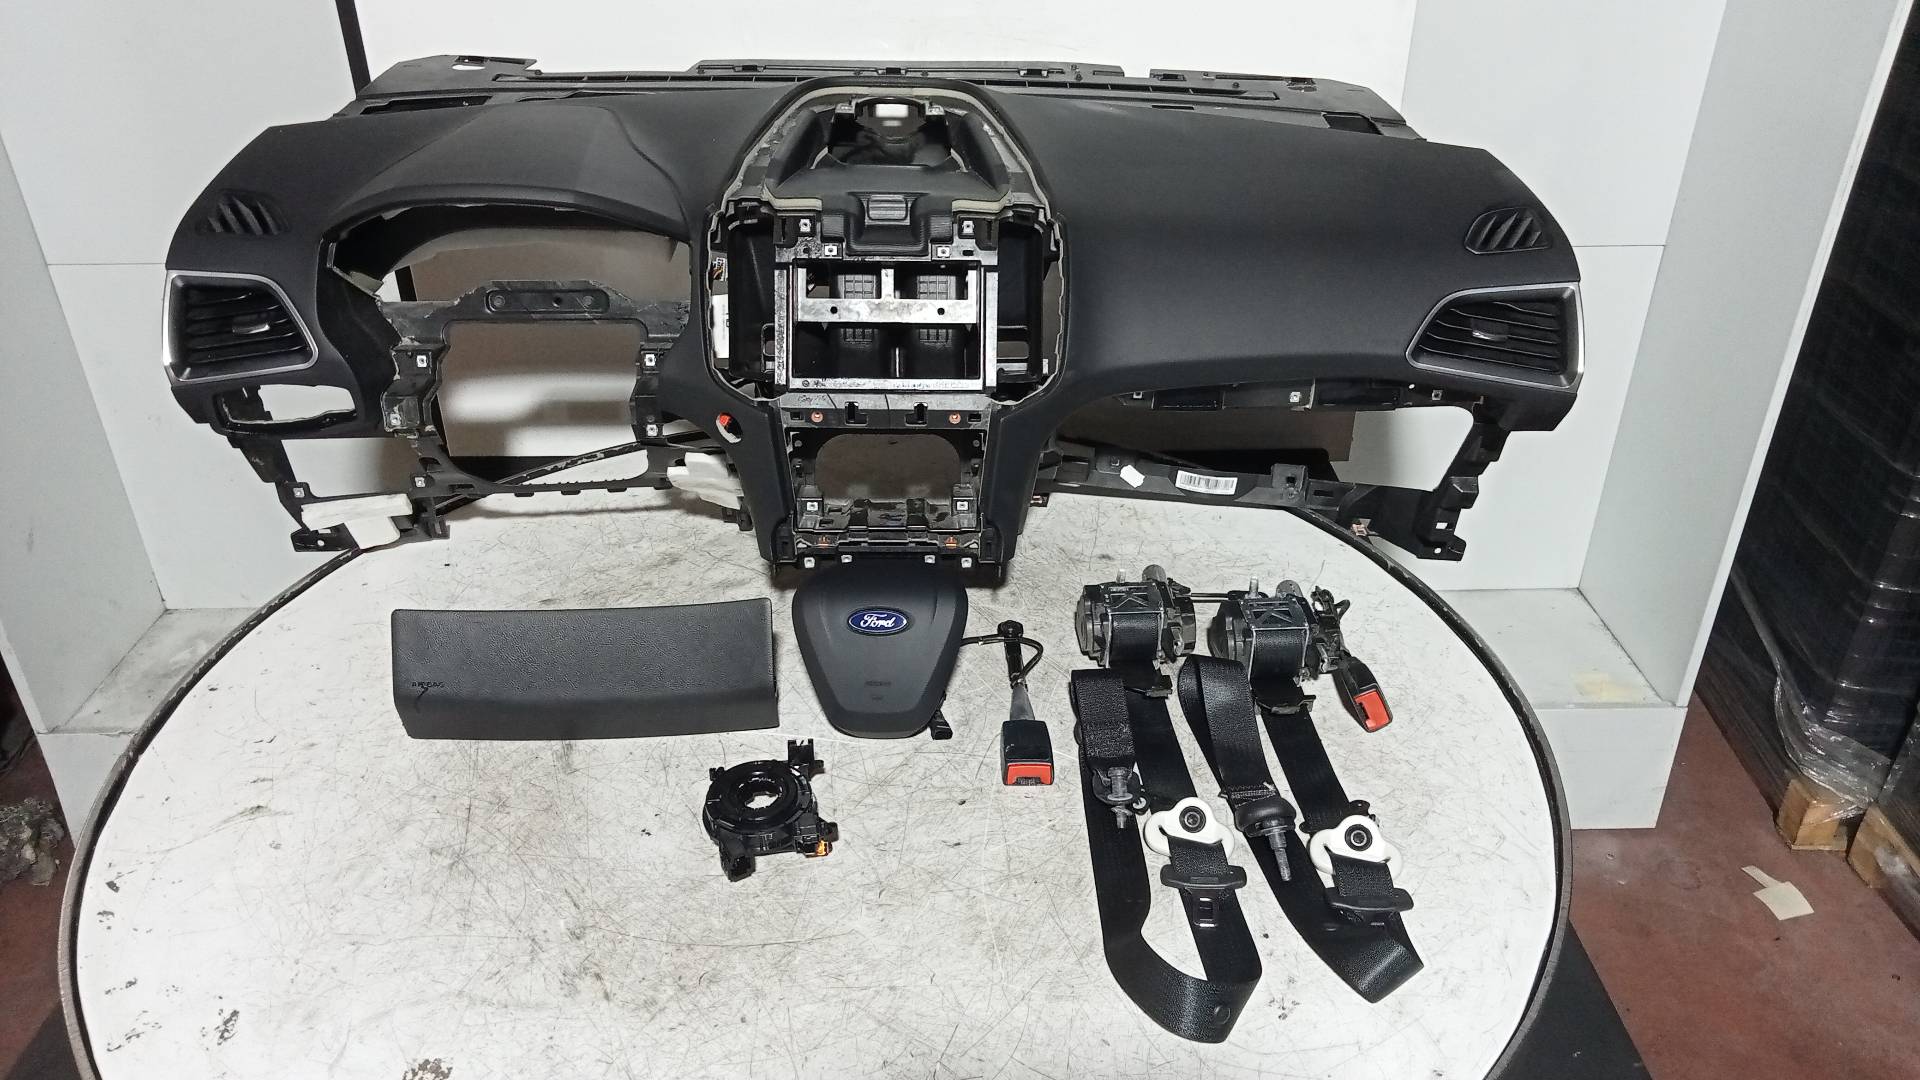 Juego de airbag usados de FORD S MAX completos